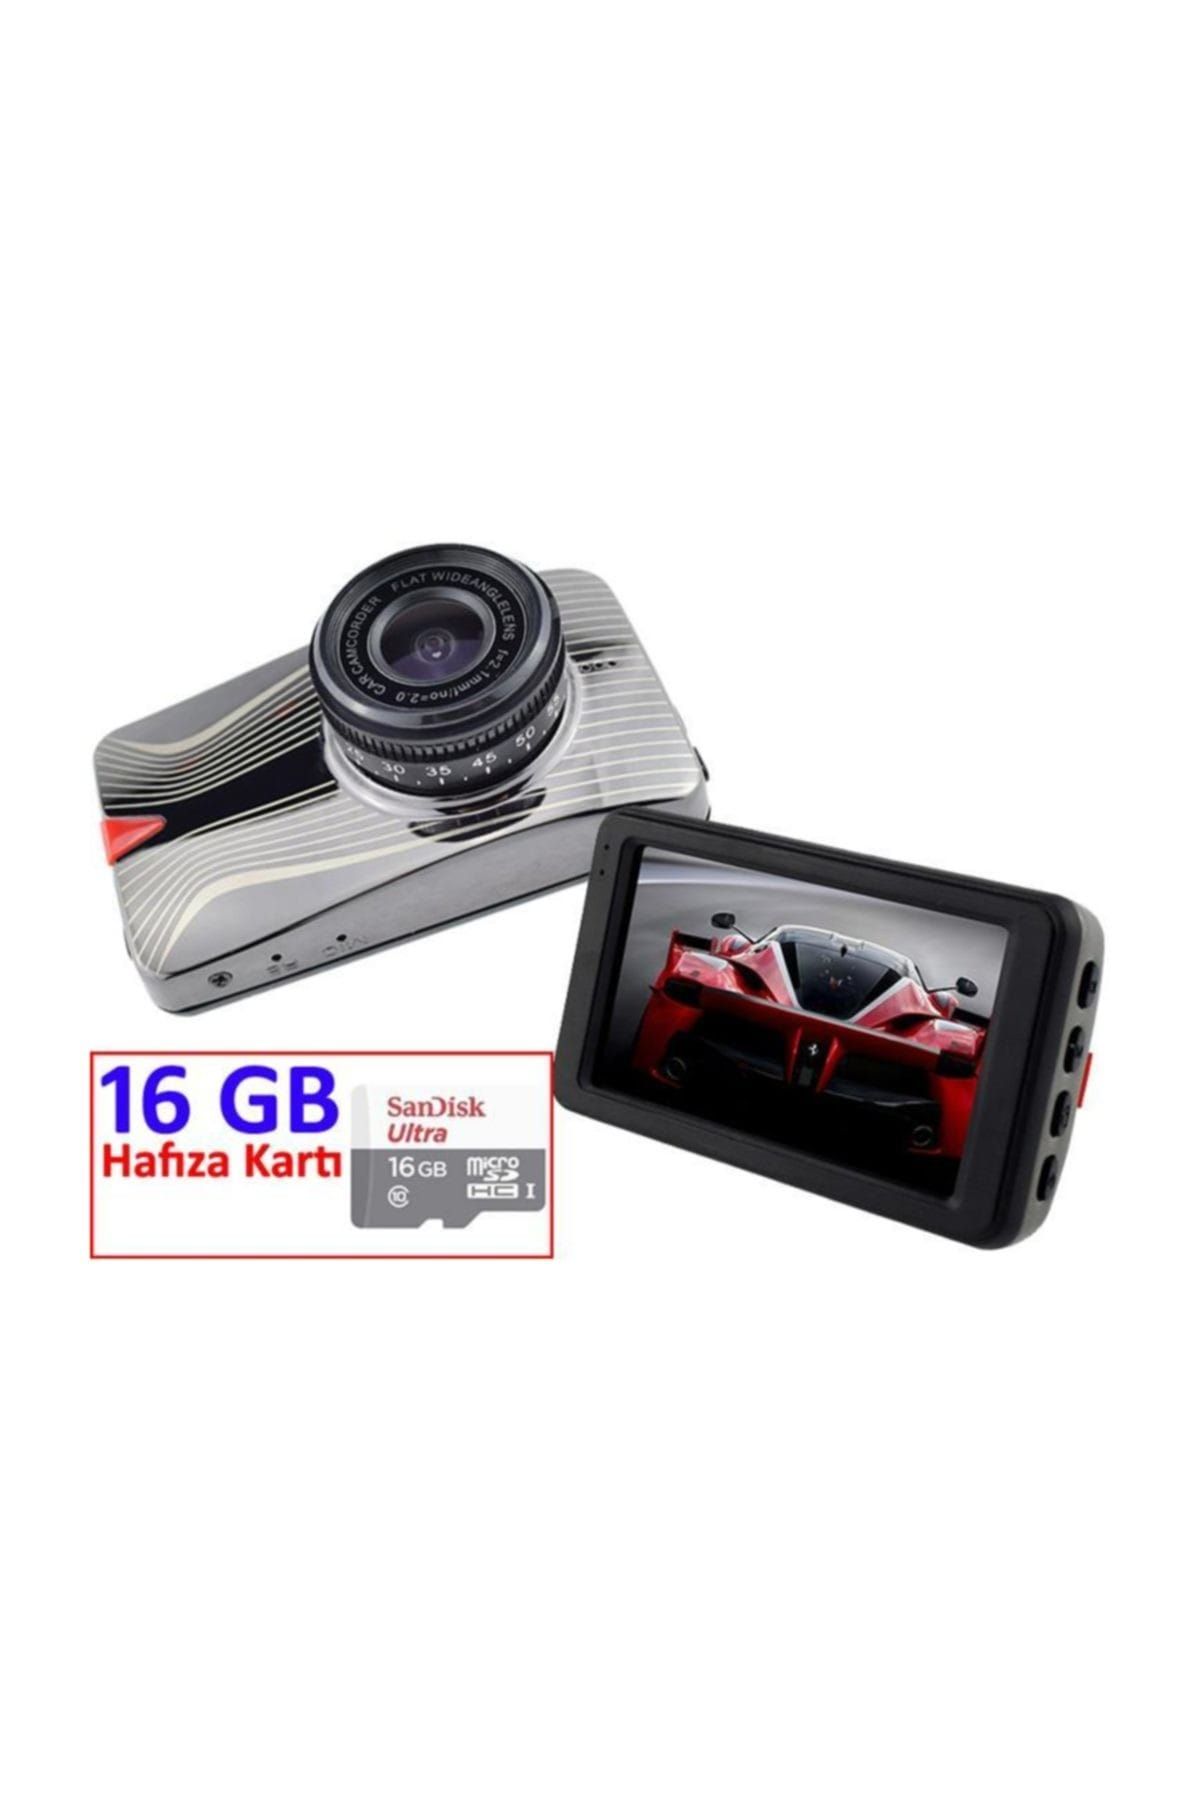 General Plus Full HD Türkçe 16MP Gece Görüş Araç Kamera GP63+16GB Hafıza Kartı